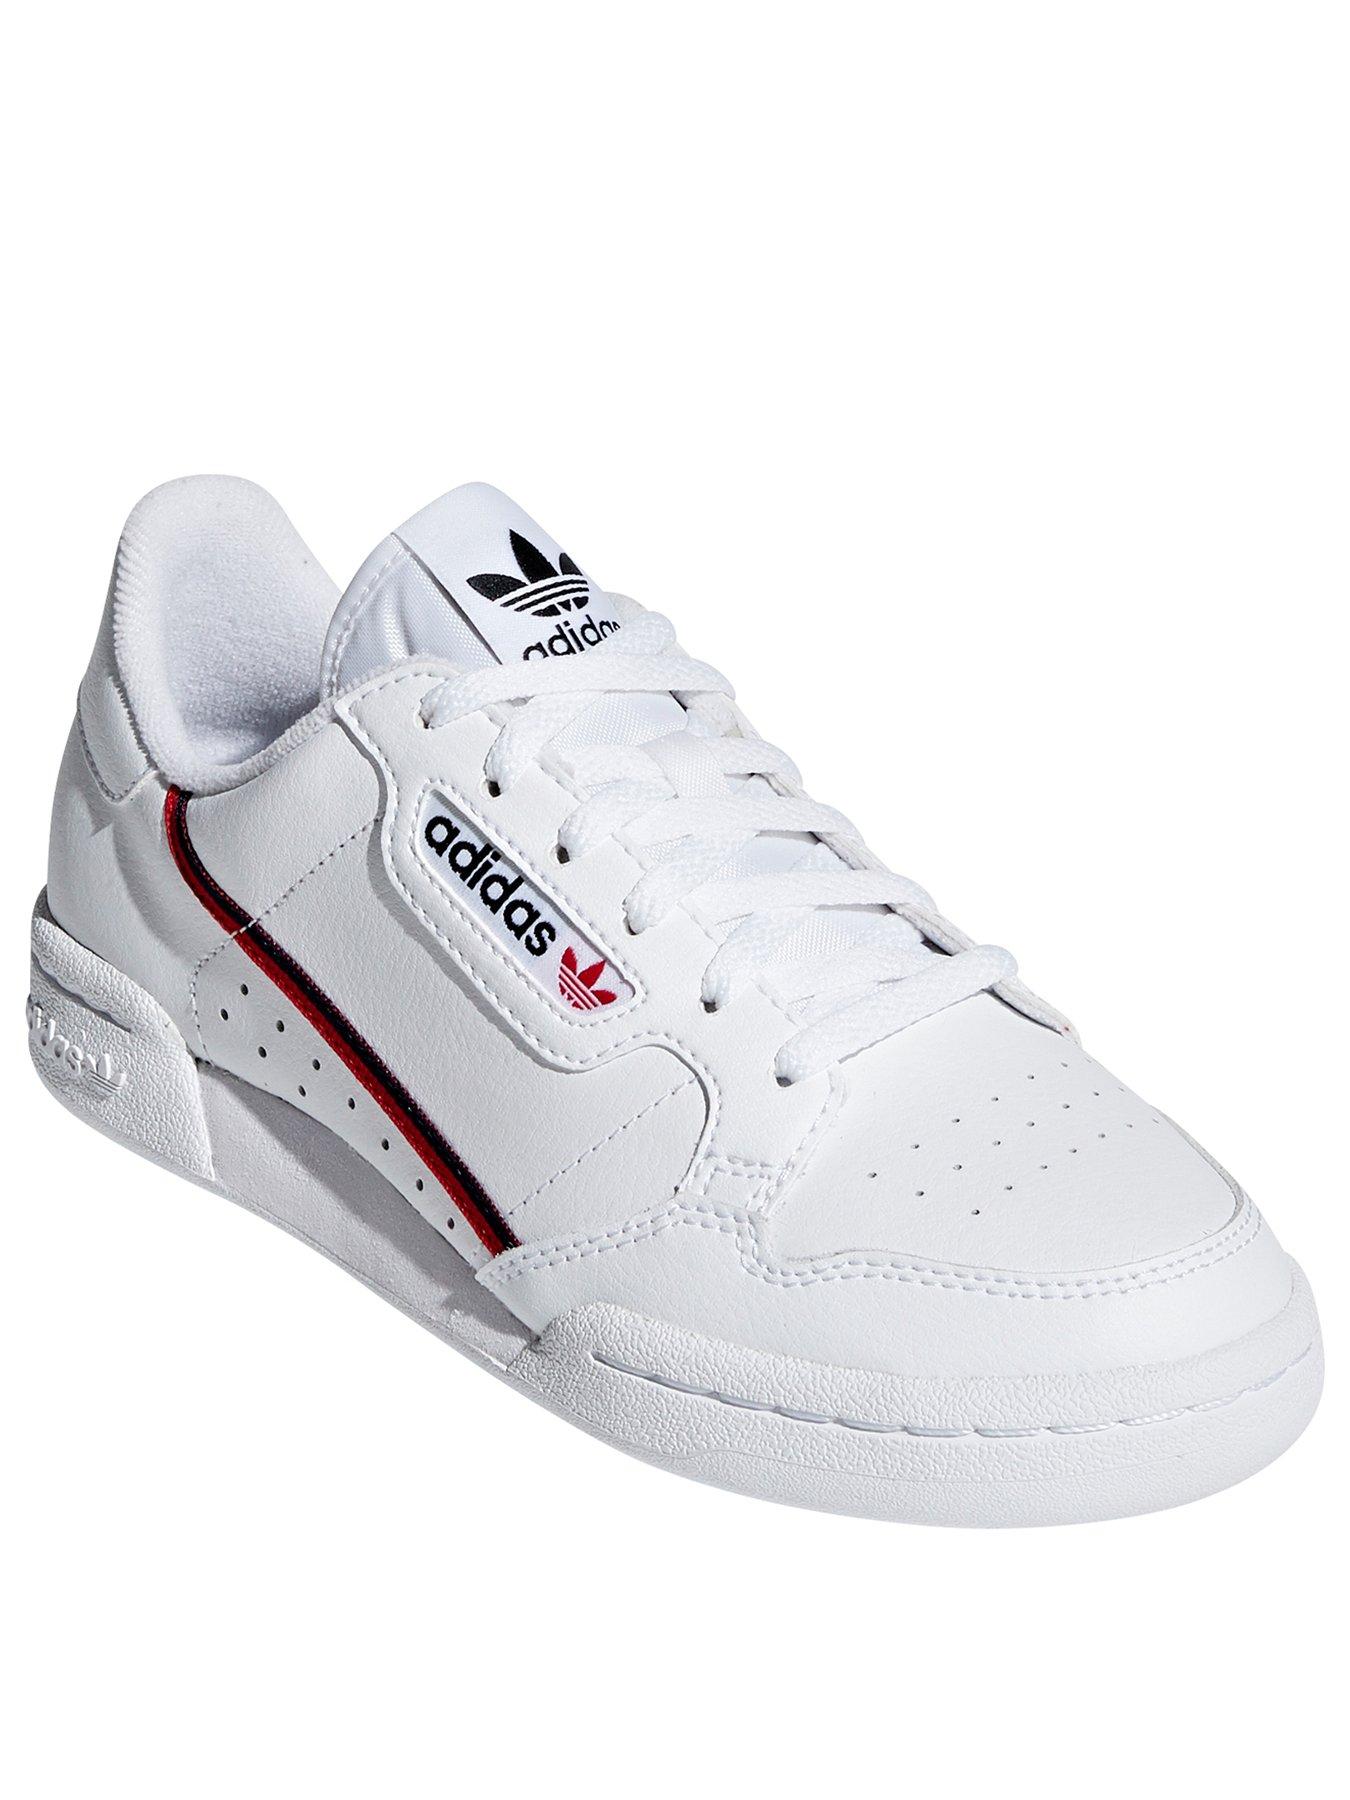 adidas white trainer